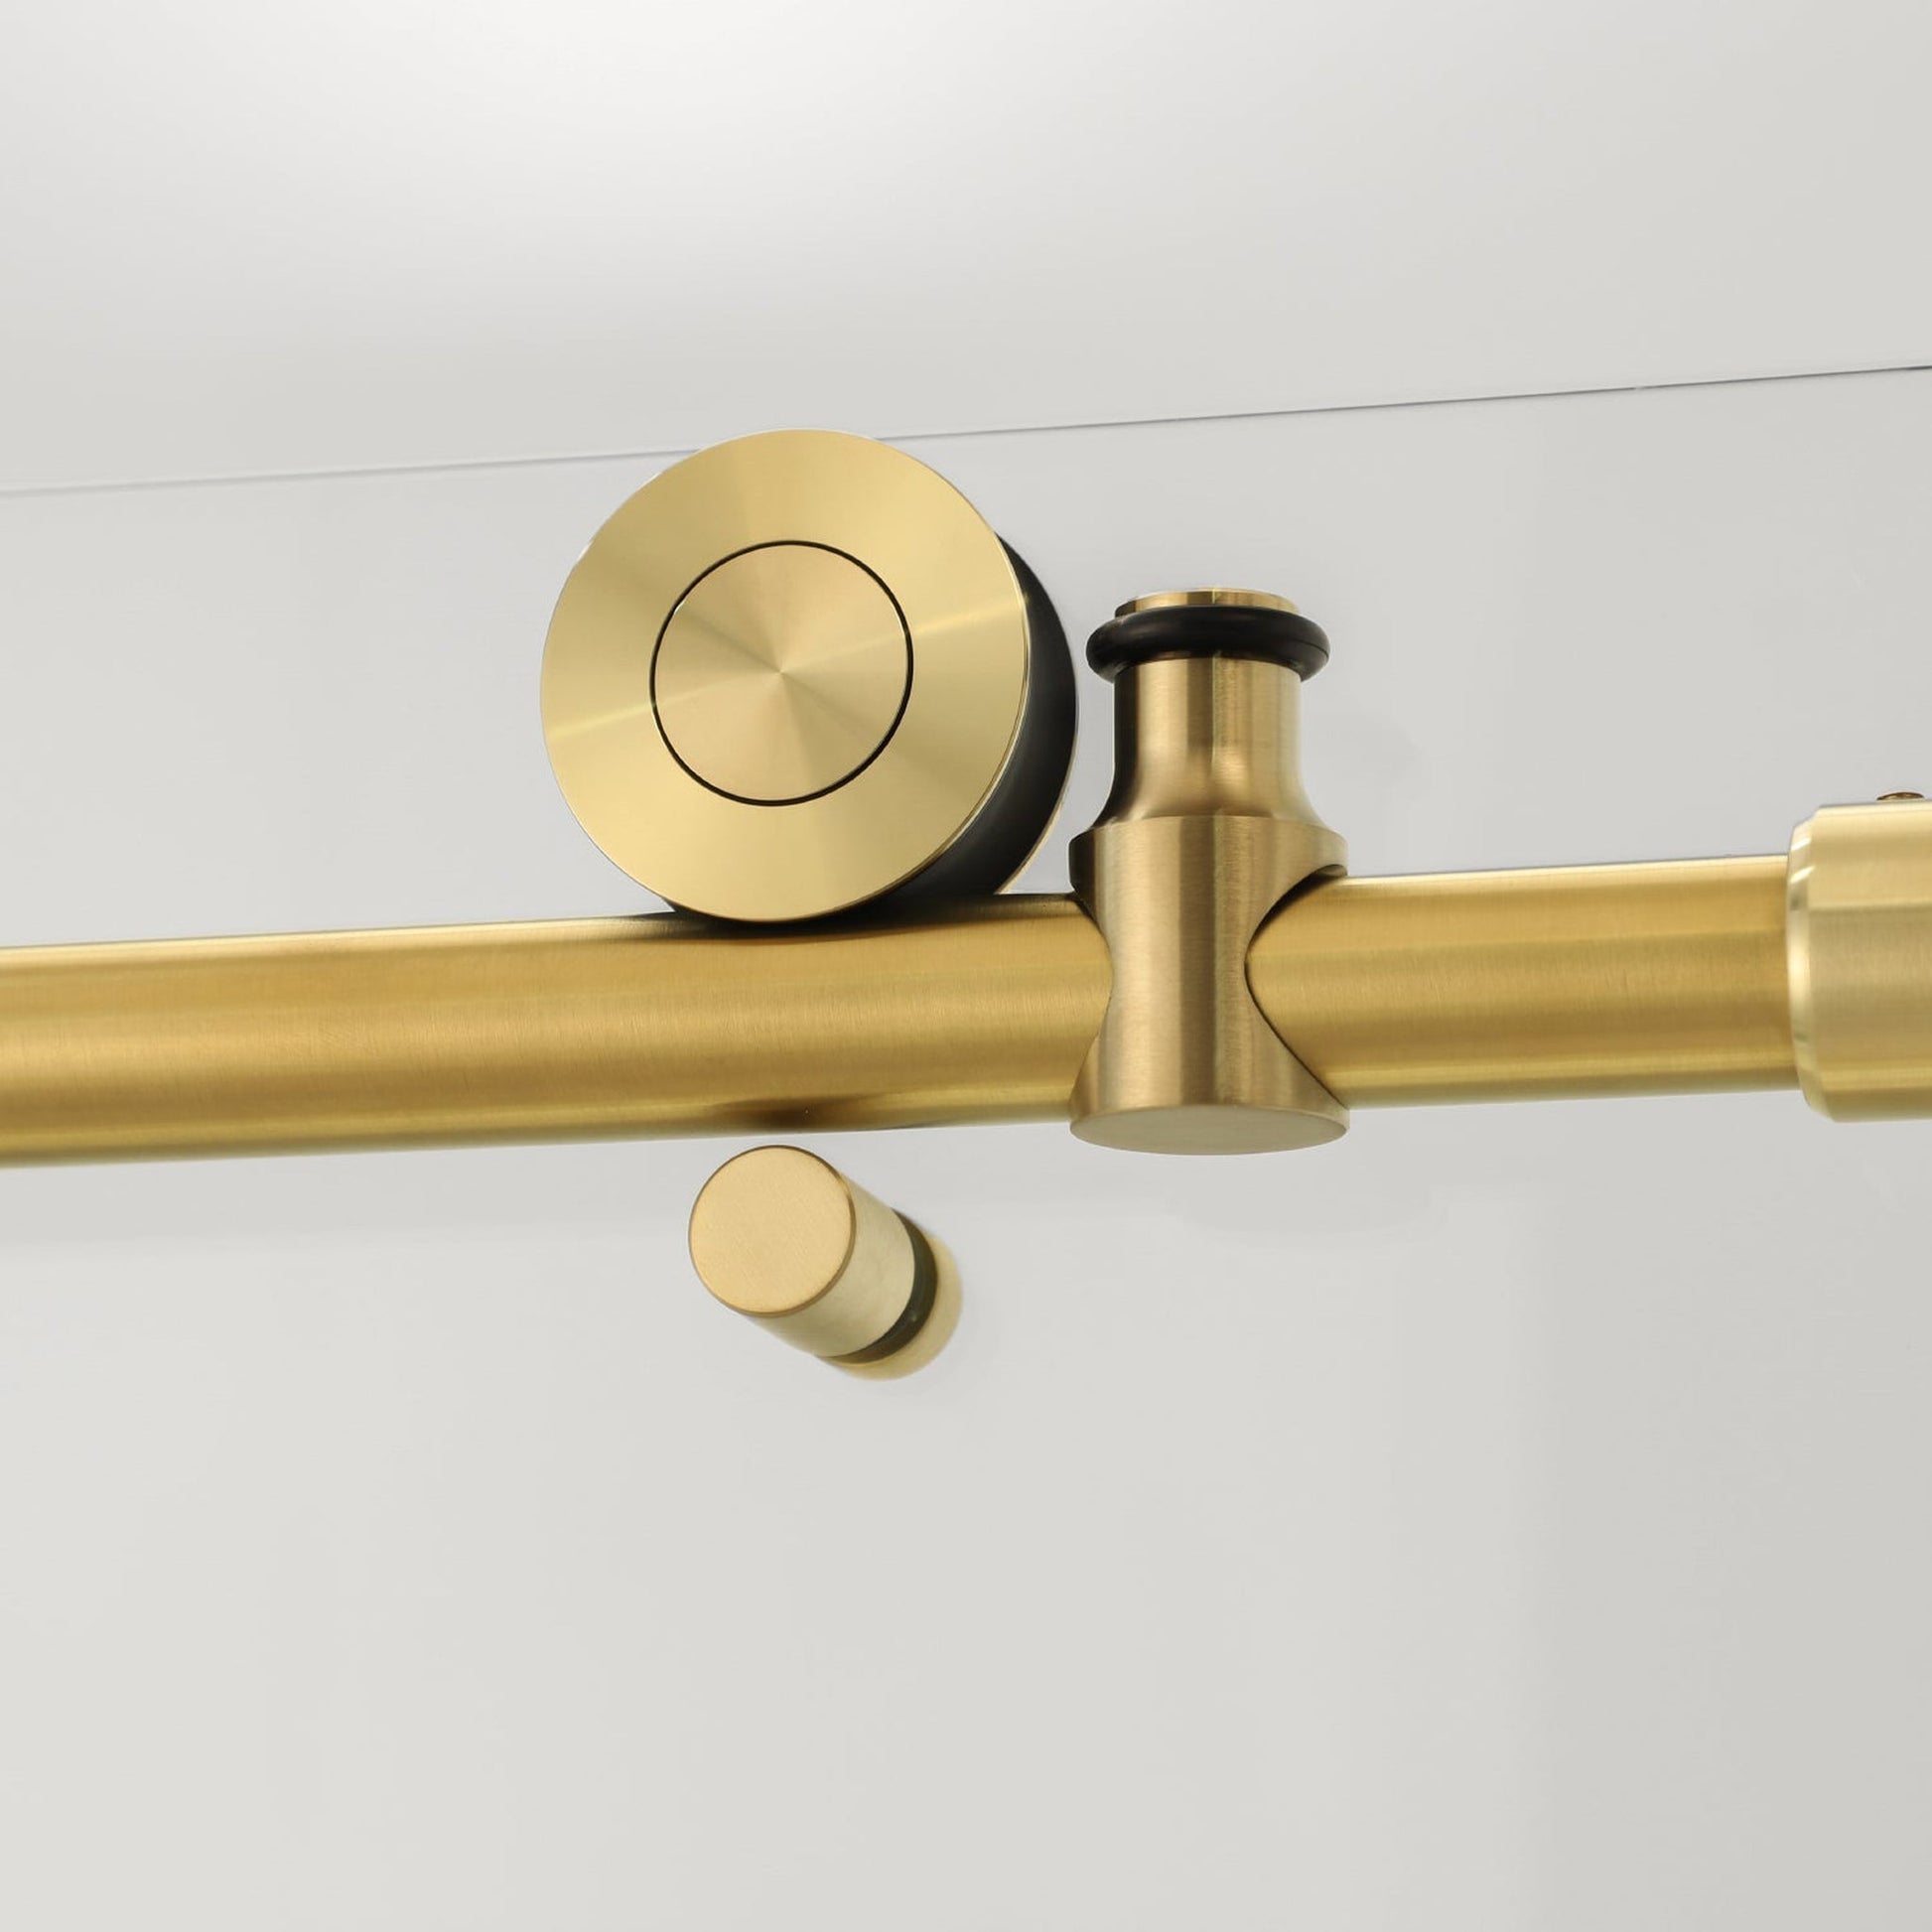 Vinnova Villena 60" x 58" Brushed Gold Single Sliding Frameless Glass Tub Door